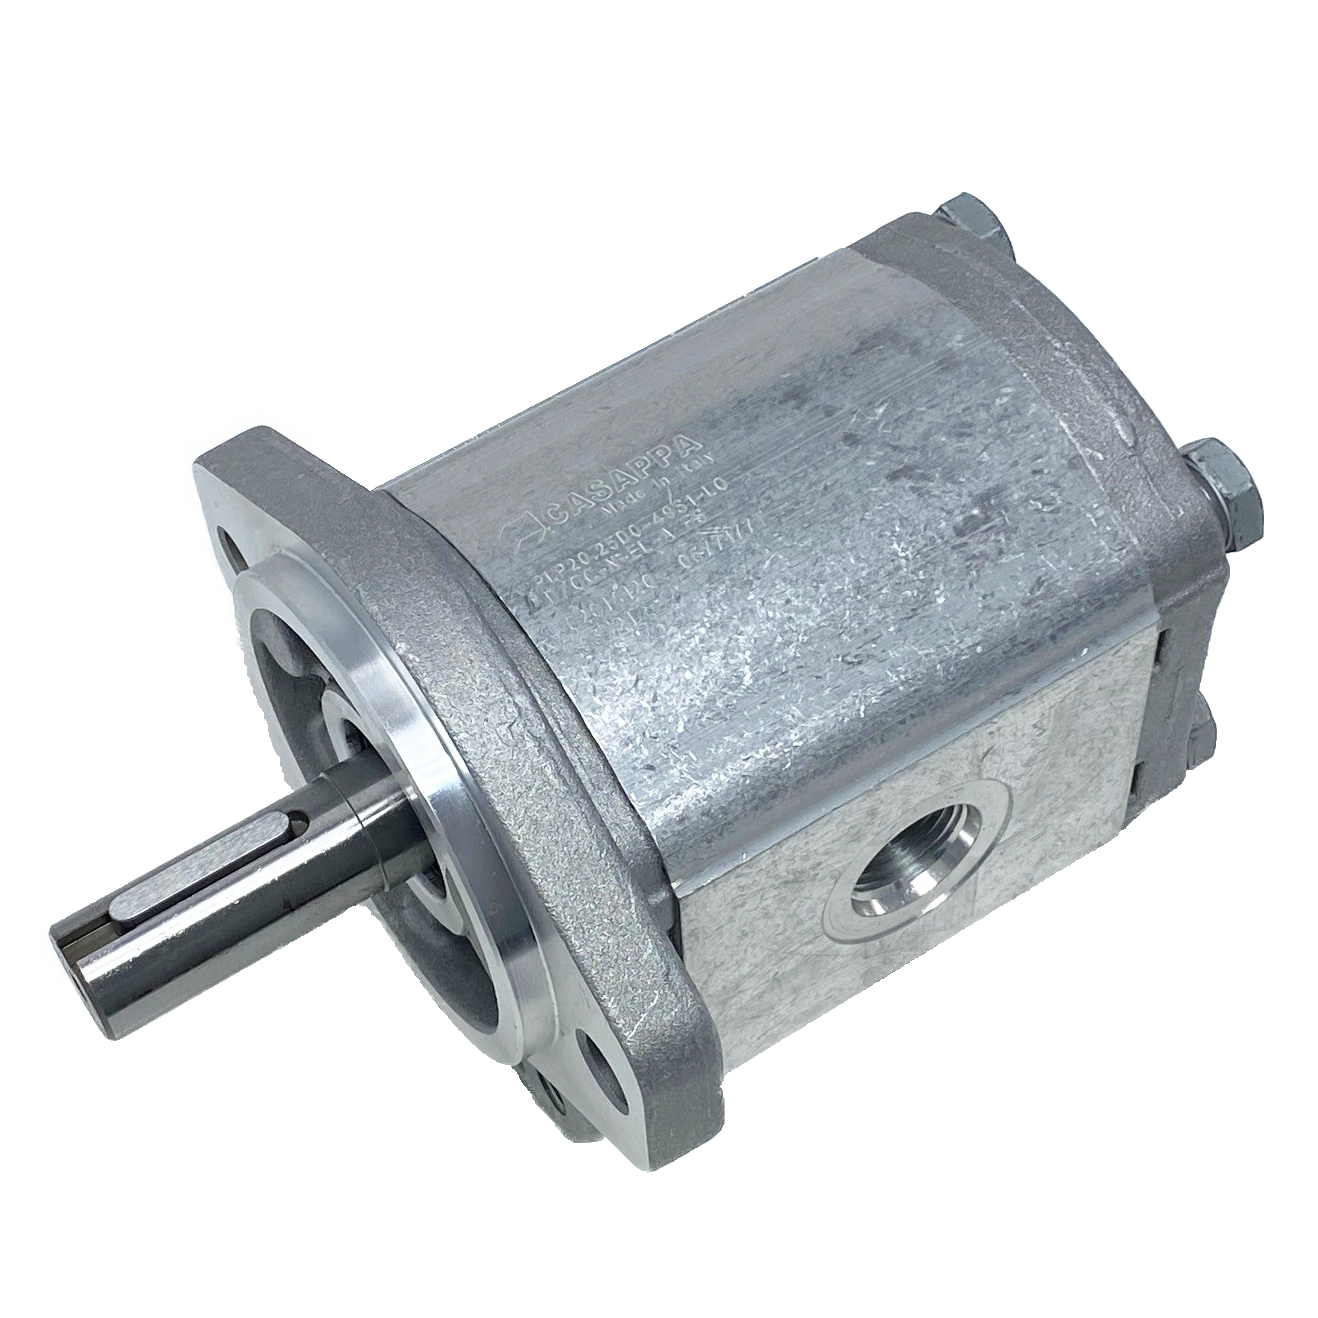 PLP20.31,5D0-49S1-LOD/OC-N-EL : Casappa Polaris Gear Pump, 33.03cc, 1885psi Rated, 2465RPM, CW, 3/4" Bore x 3/16" Key Shaft, SAE A 2-Bolt Flange, 0.75 (3/4") #12 SAE Inlet, 0.625 (5/8") #10 SAE Outlet, Aluminum Body & Flange